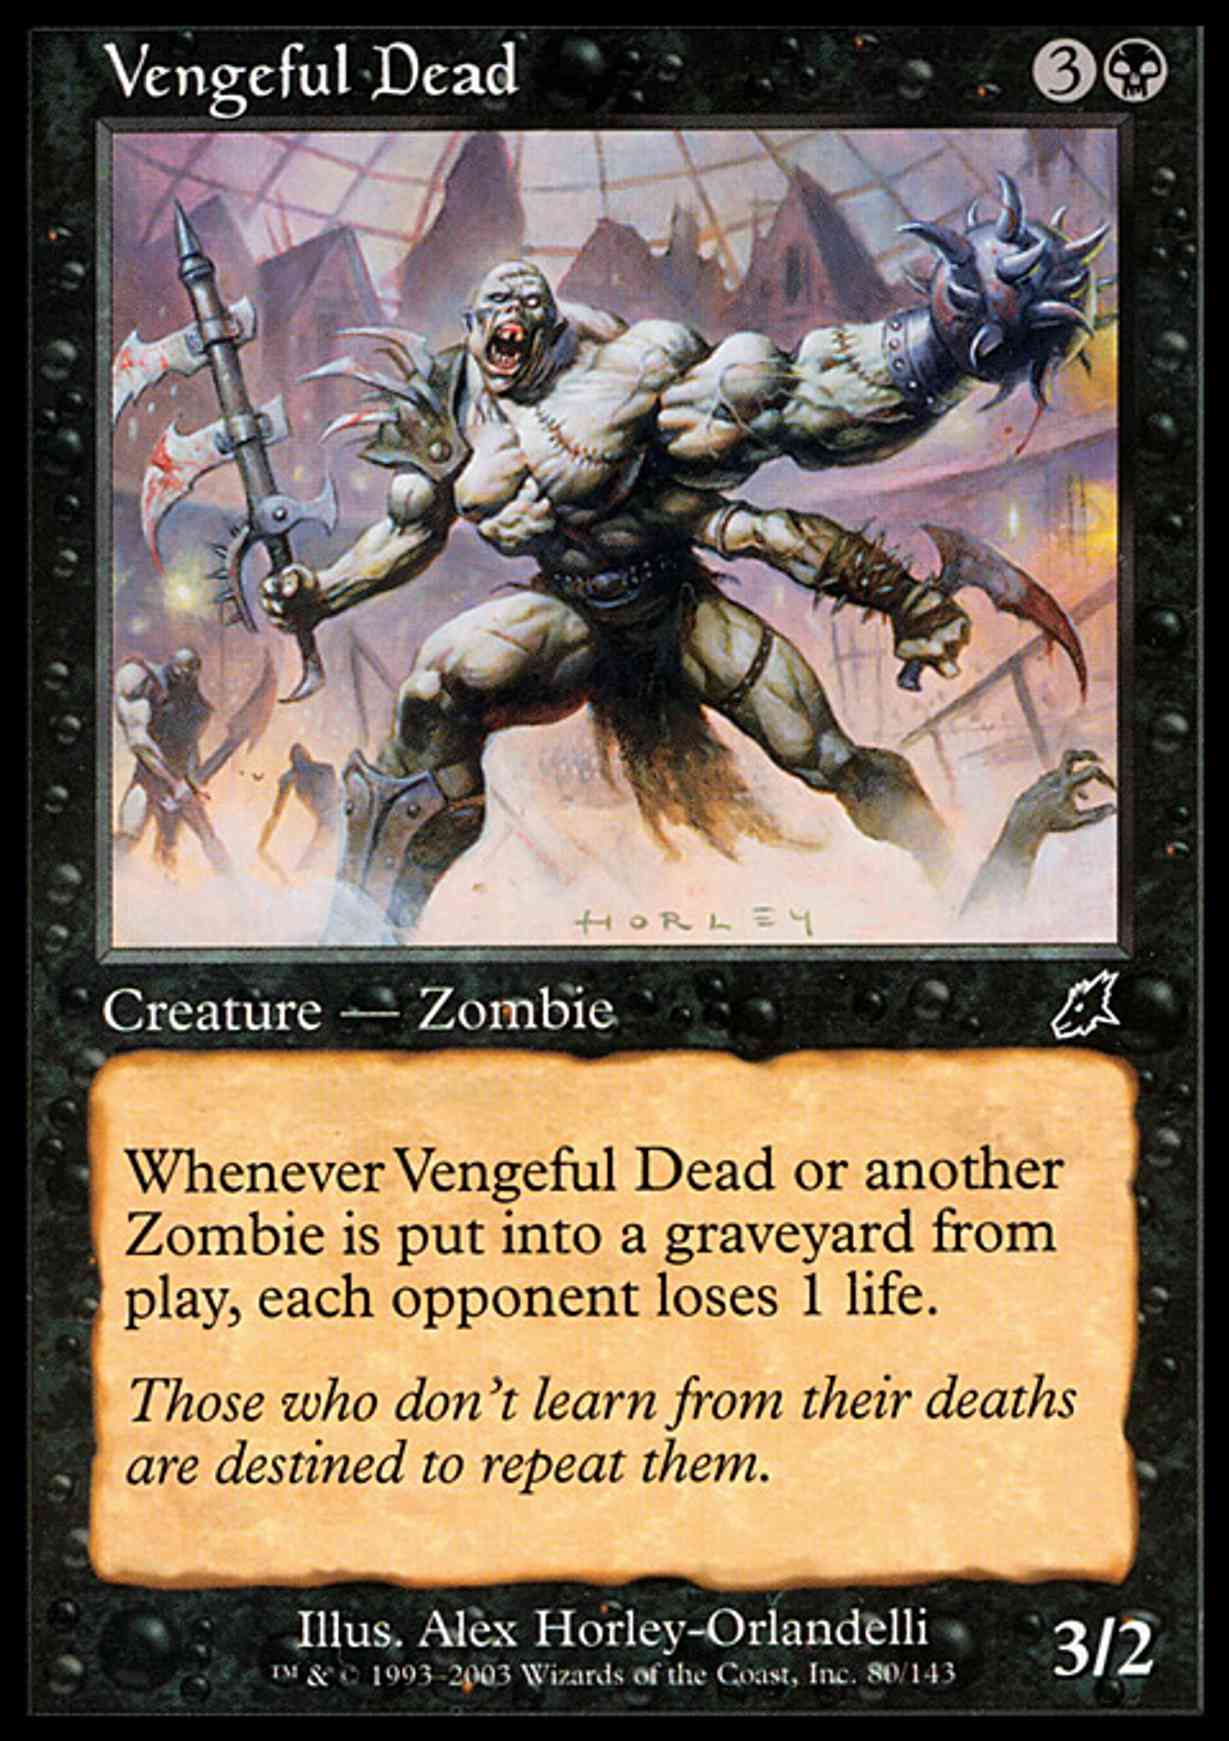 Vengeful Dead magic card front